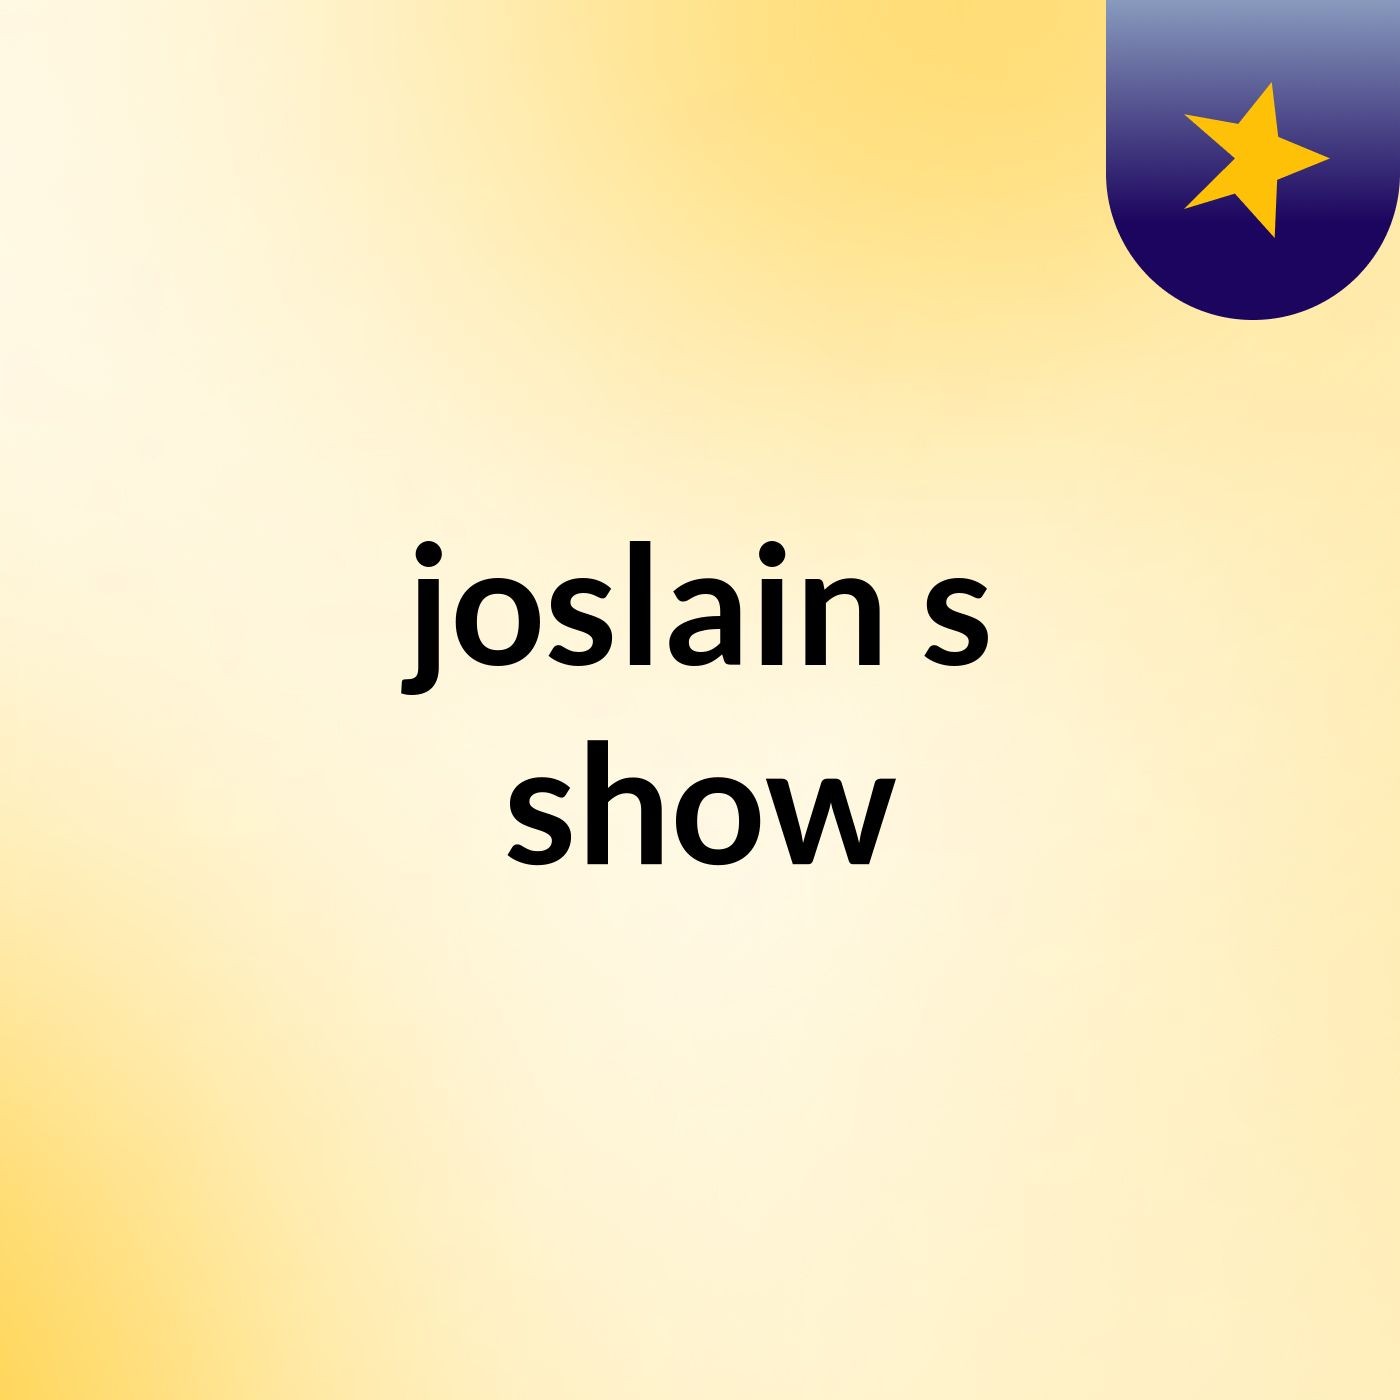 joslain's show